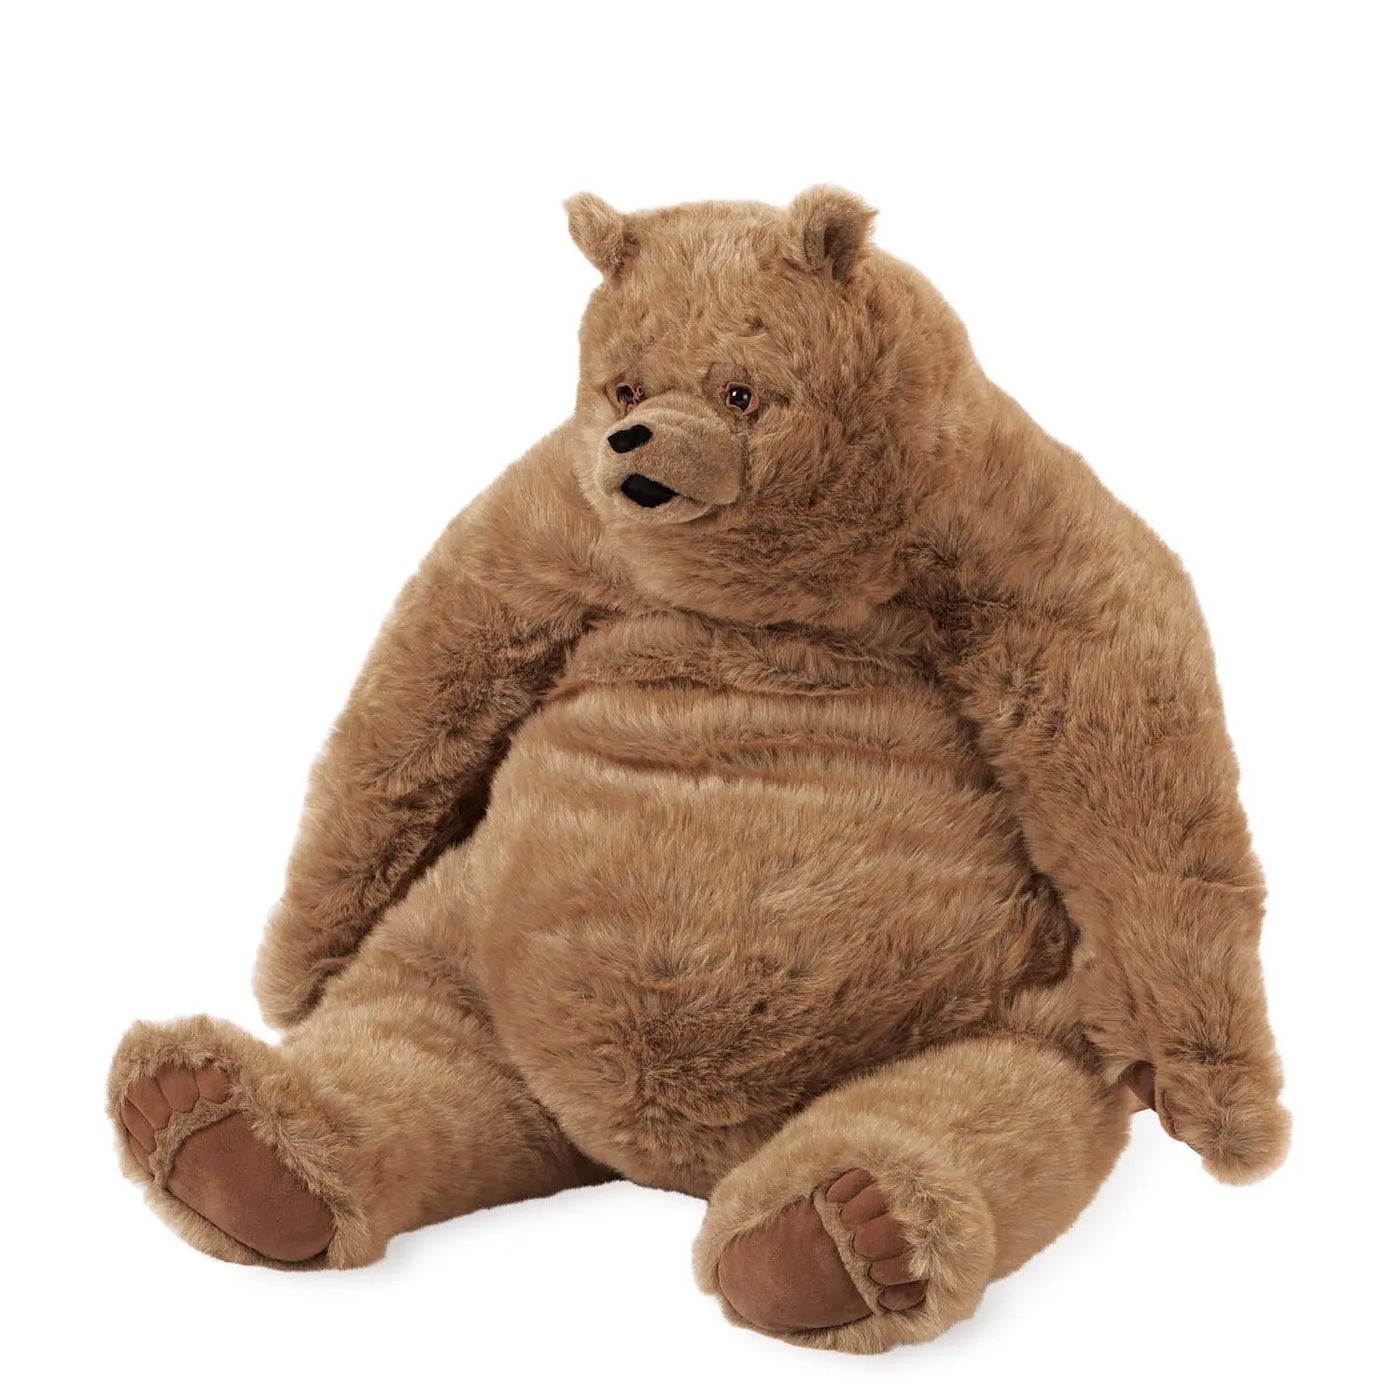 little bear stuffed animal